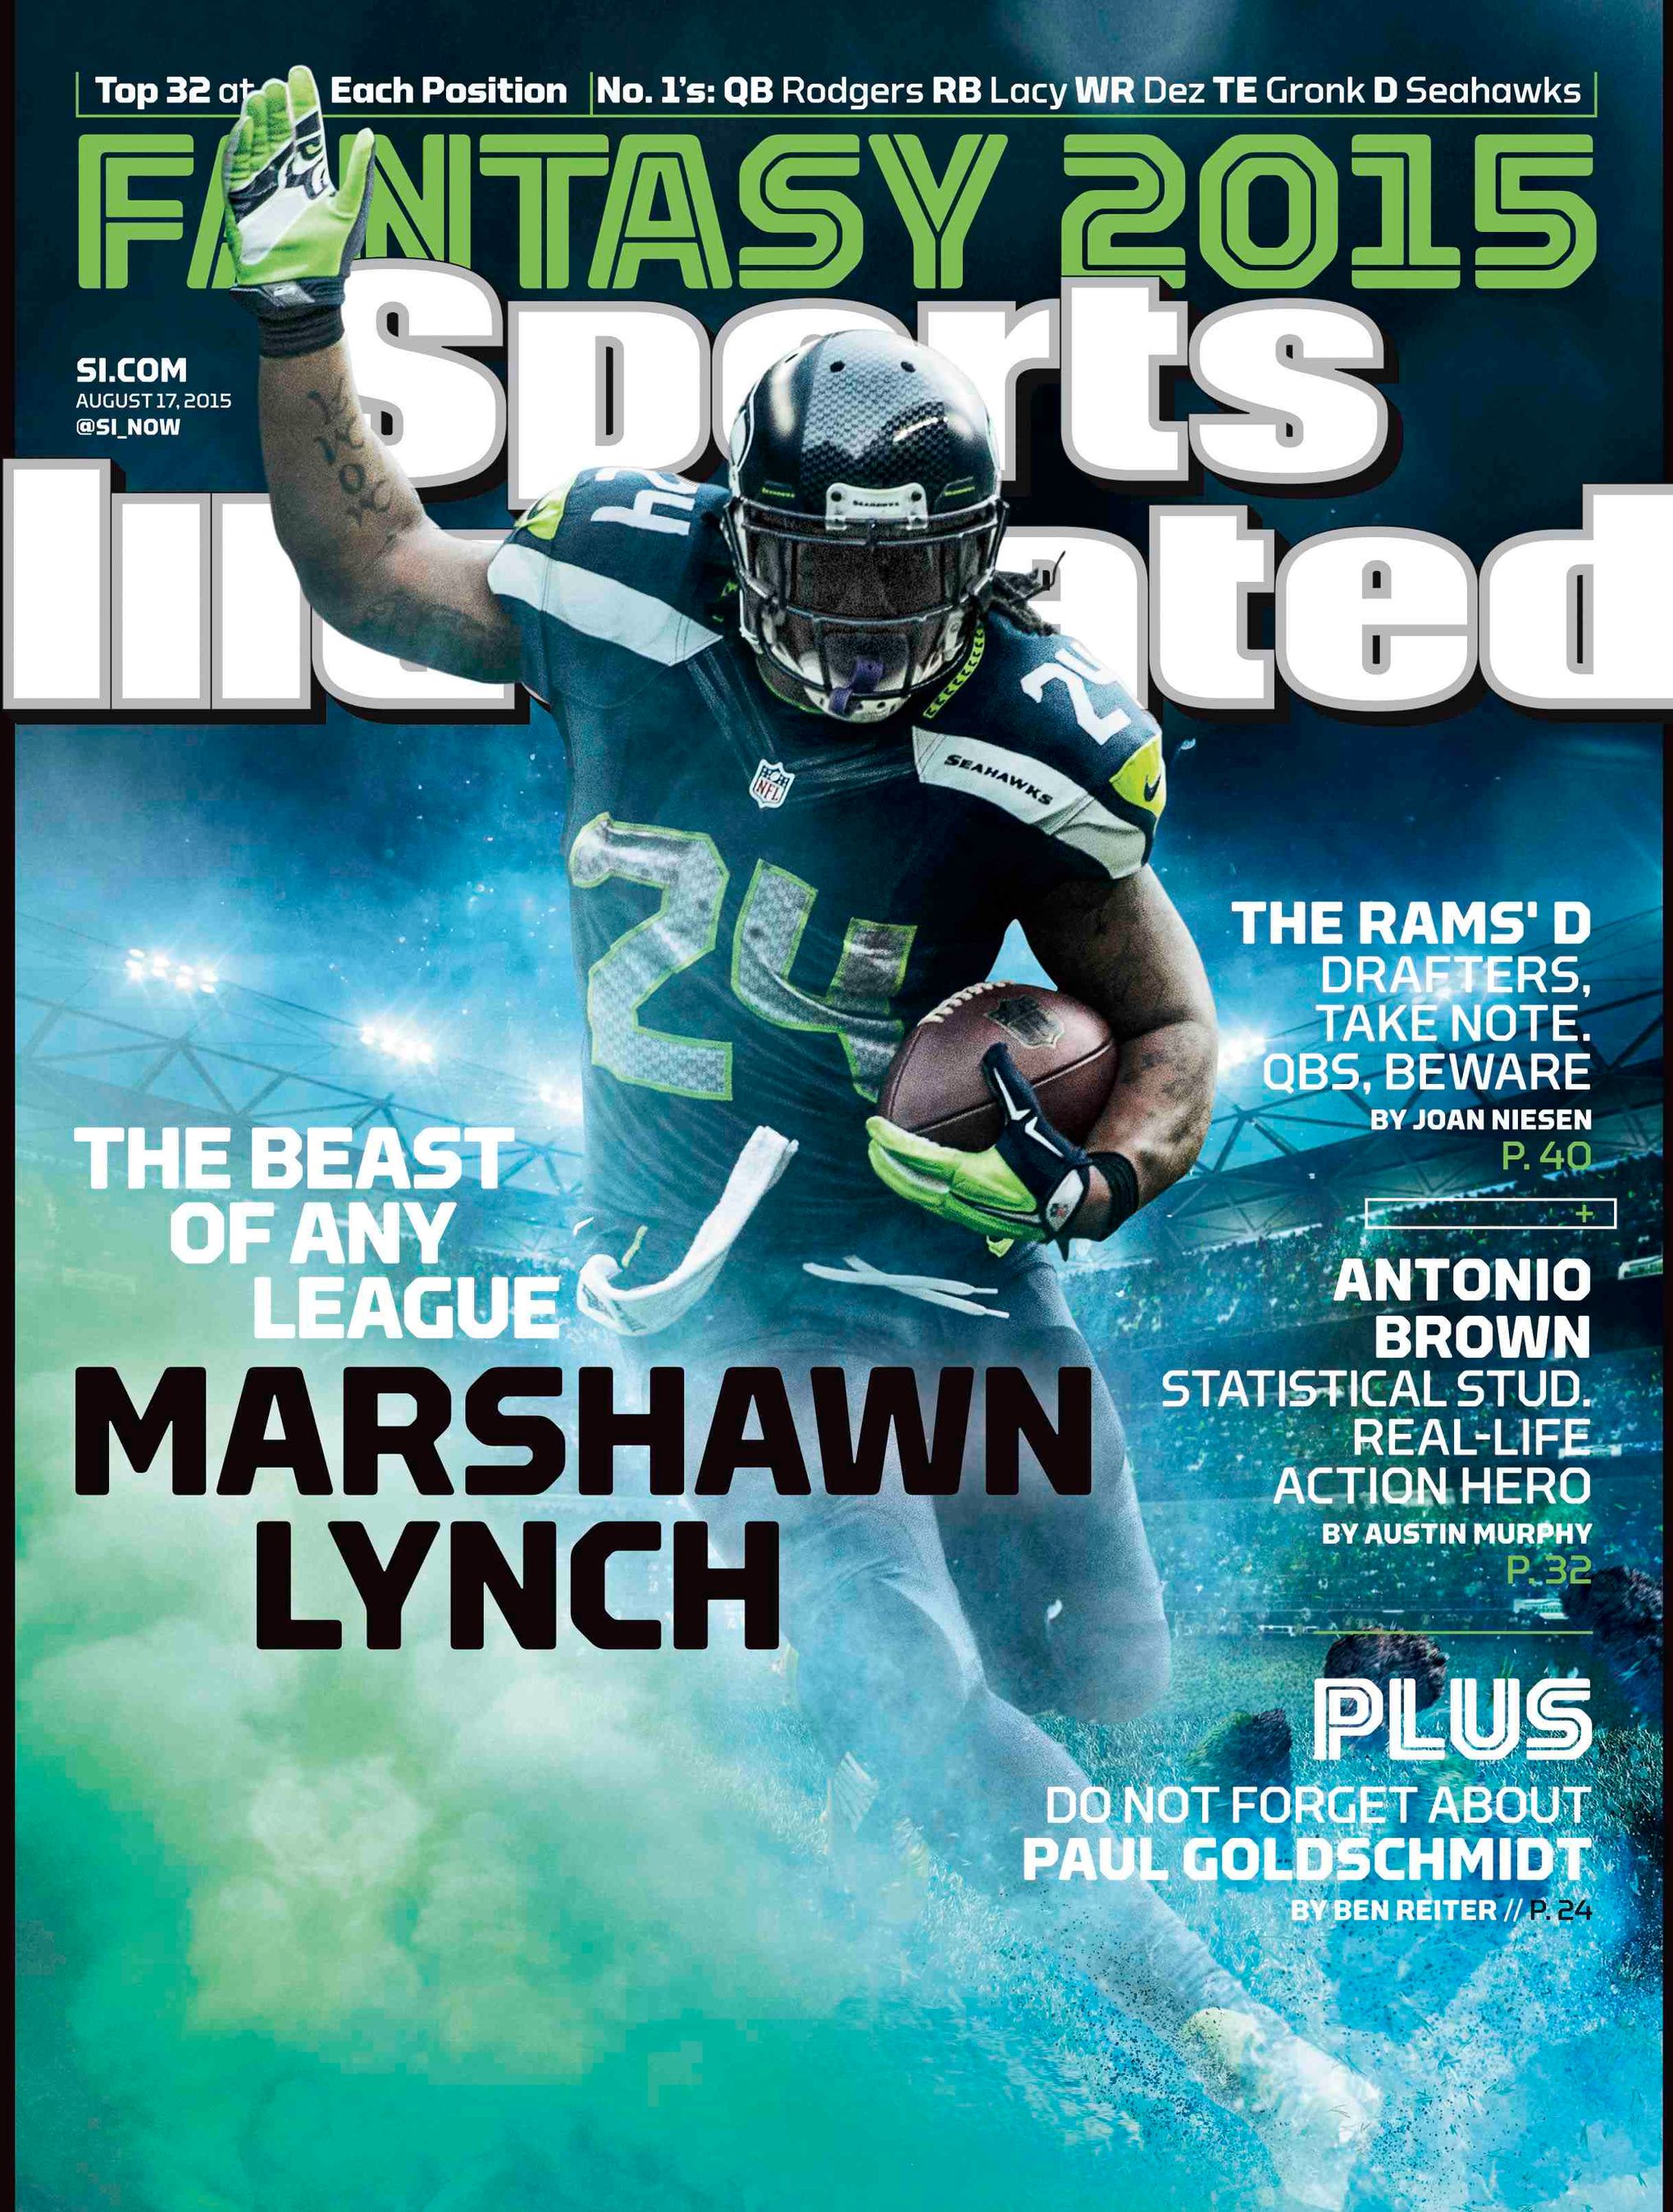 Seahawks' Marshawn Lynch hits regional Sports Illustrated cover